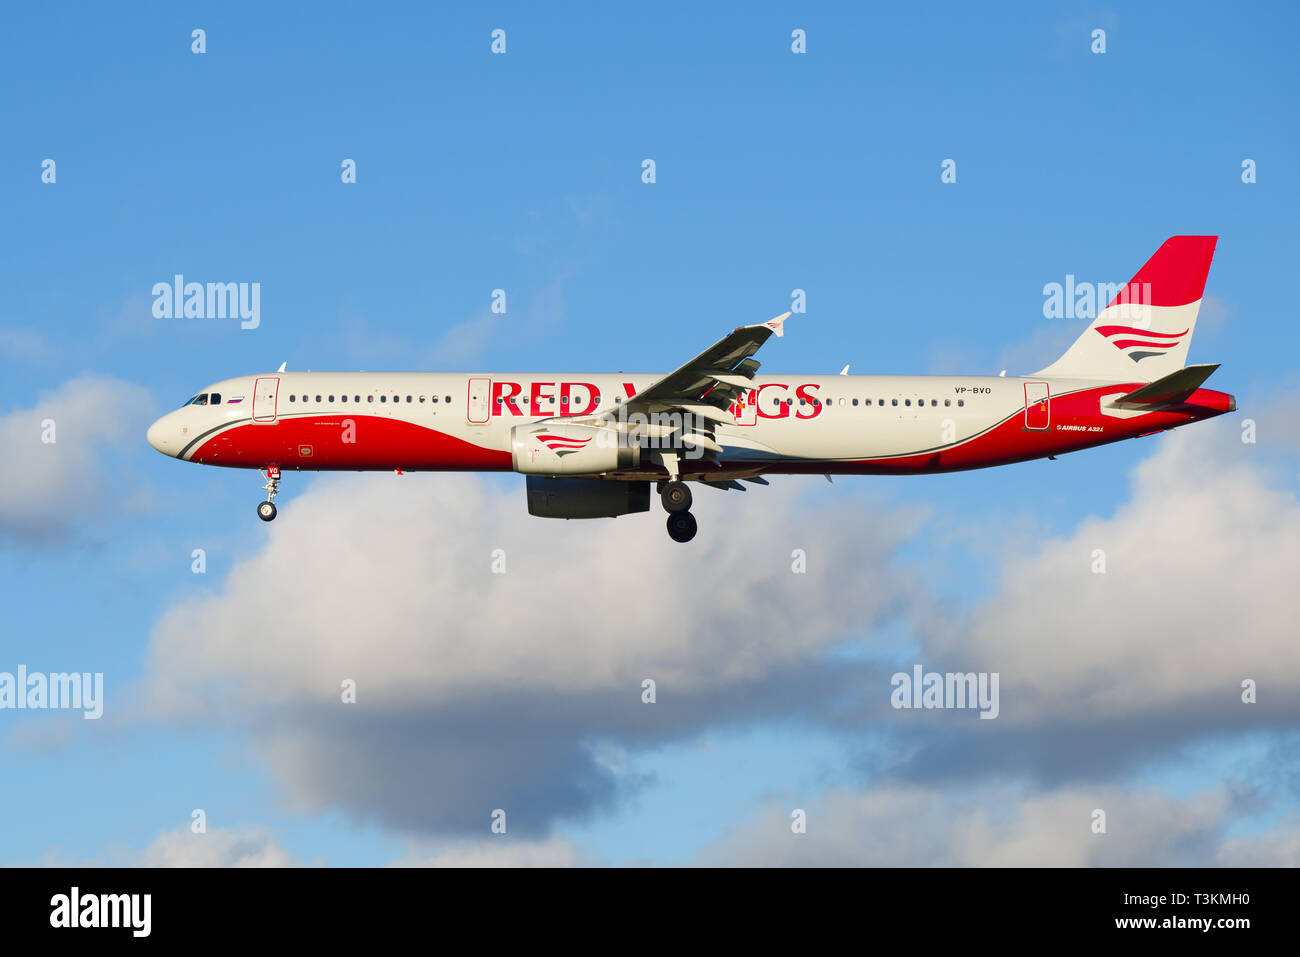 ST. PETERSBURG, Russland - Oktober 25, 2018: Der Airbus A 321-200 (VP-Bvo) der Red Wings Fluggesellschaft vor der Landung am Flughafen Pulkowo Stockfoto